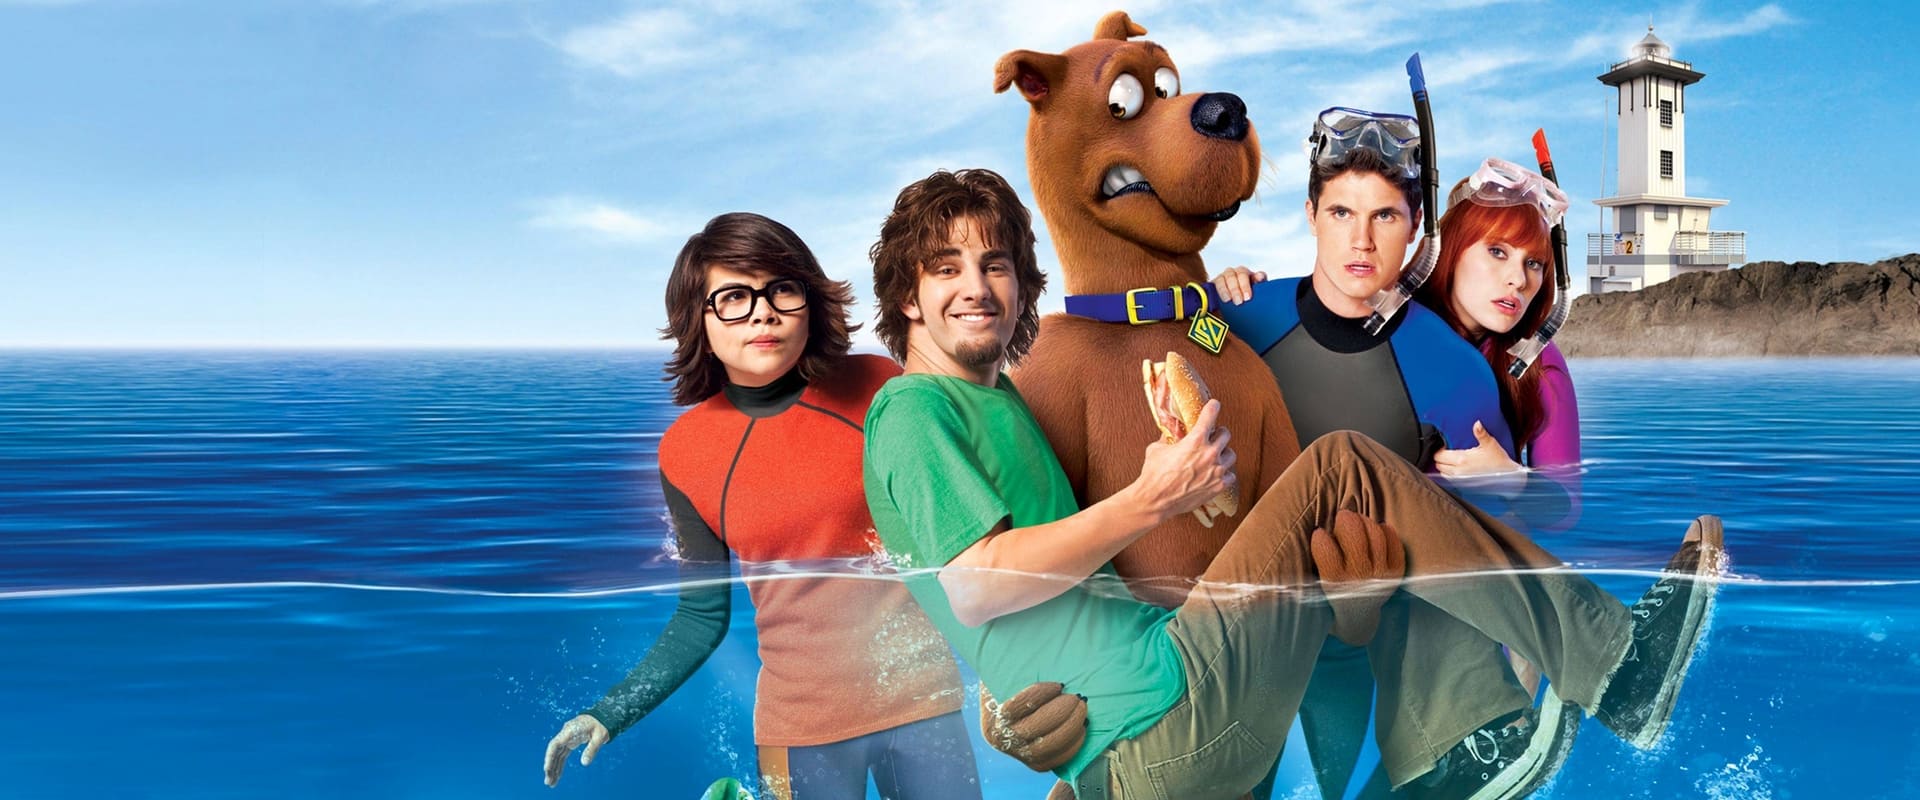 Scooby-Doo! - Sjöodjurets Förbannelse